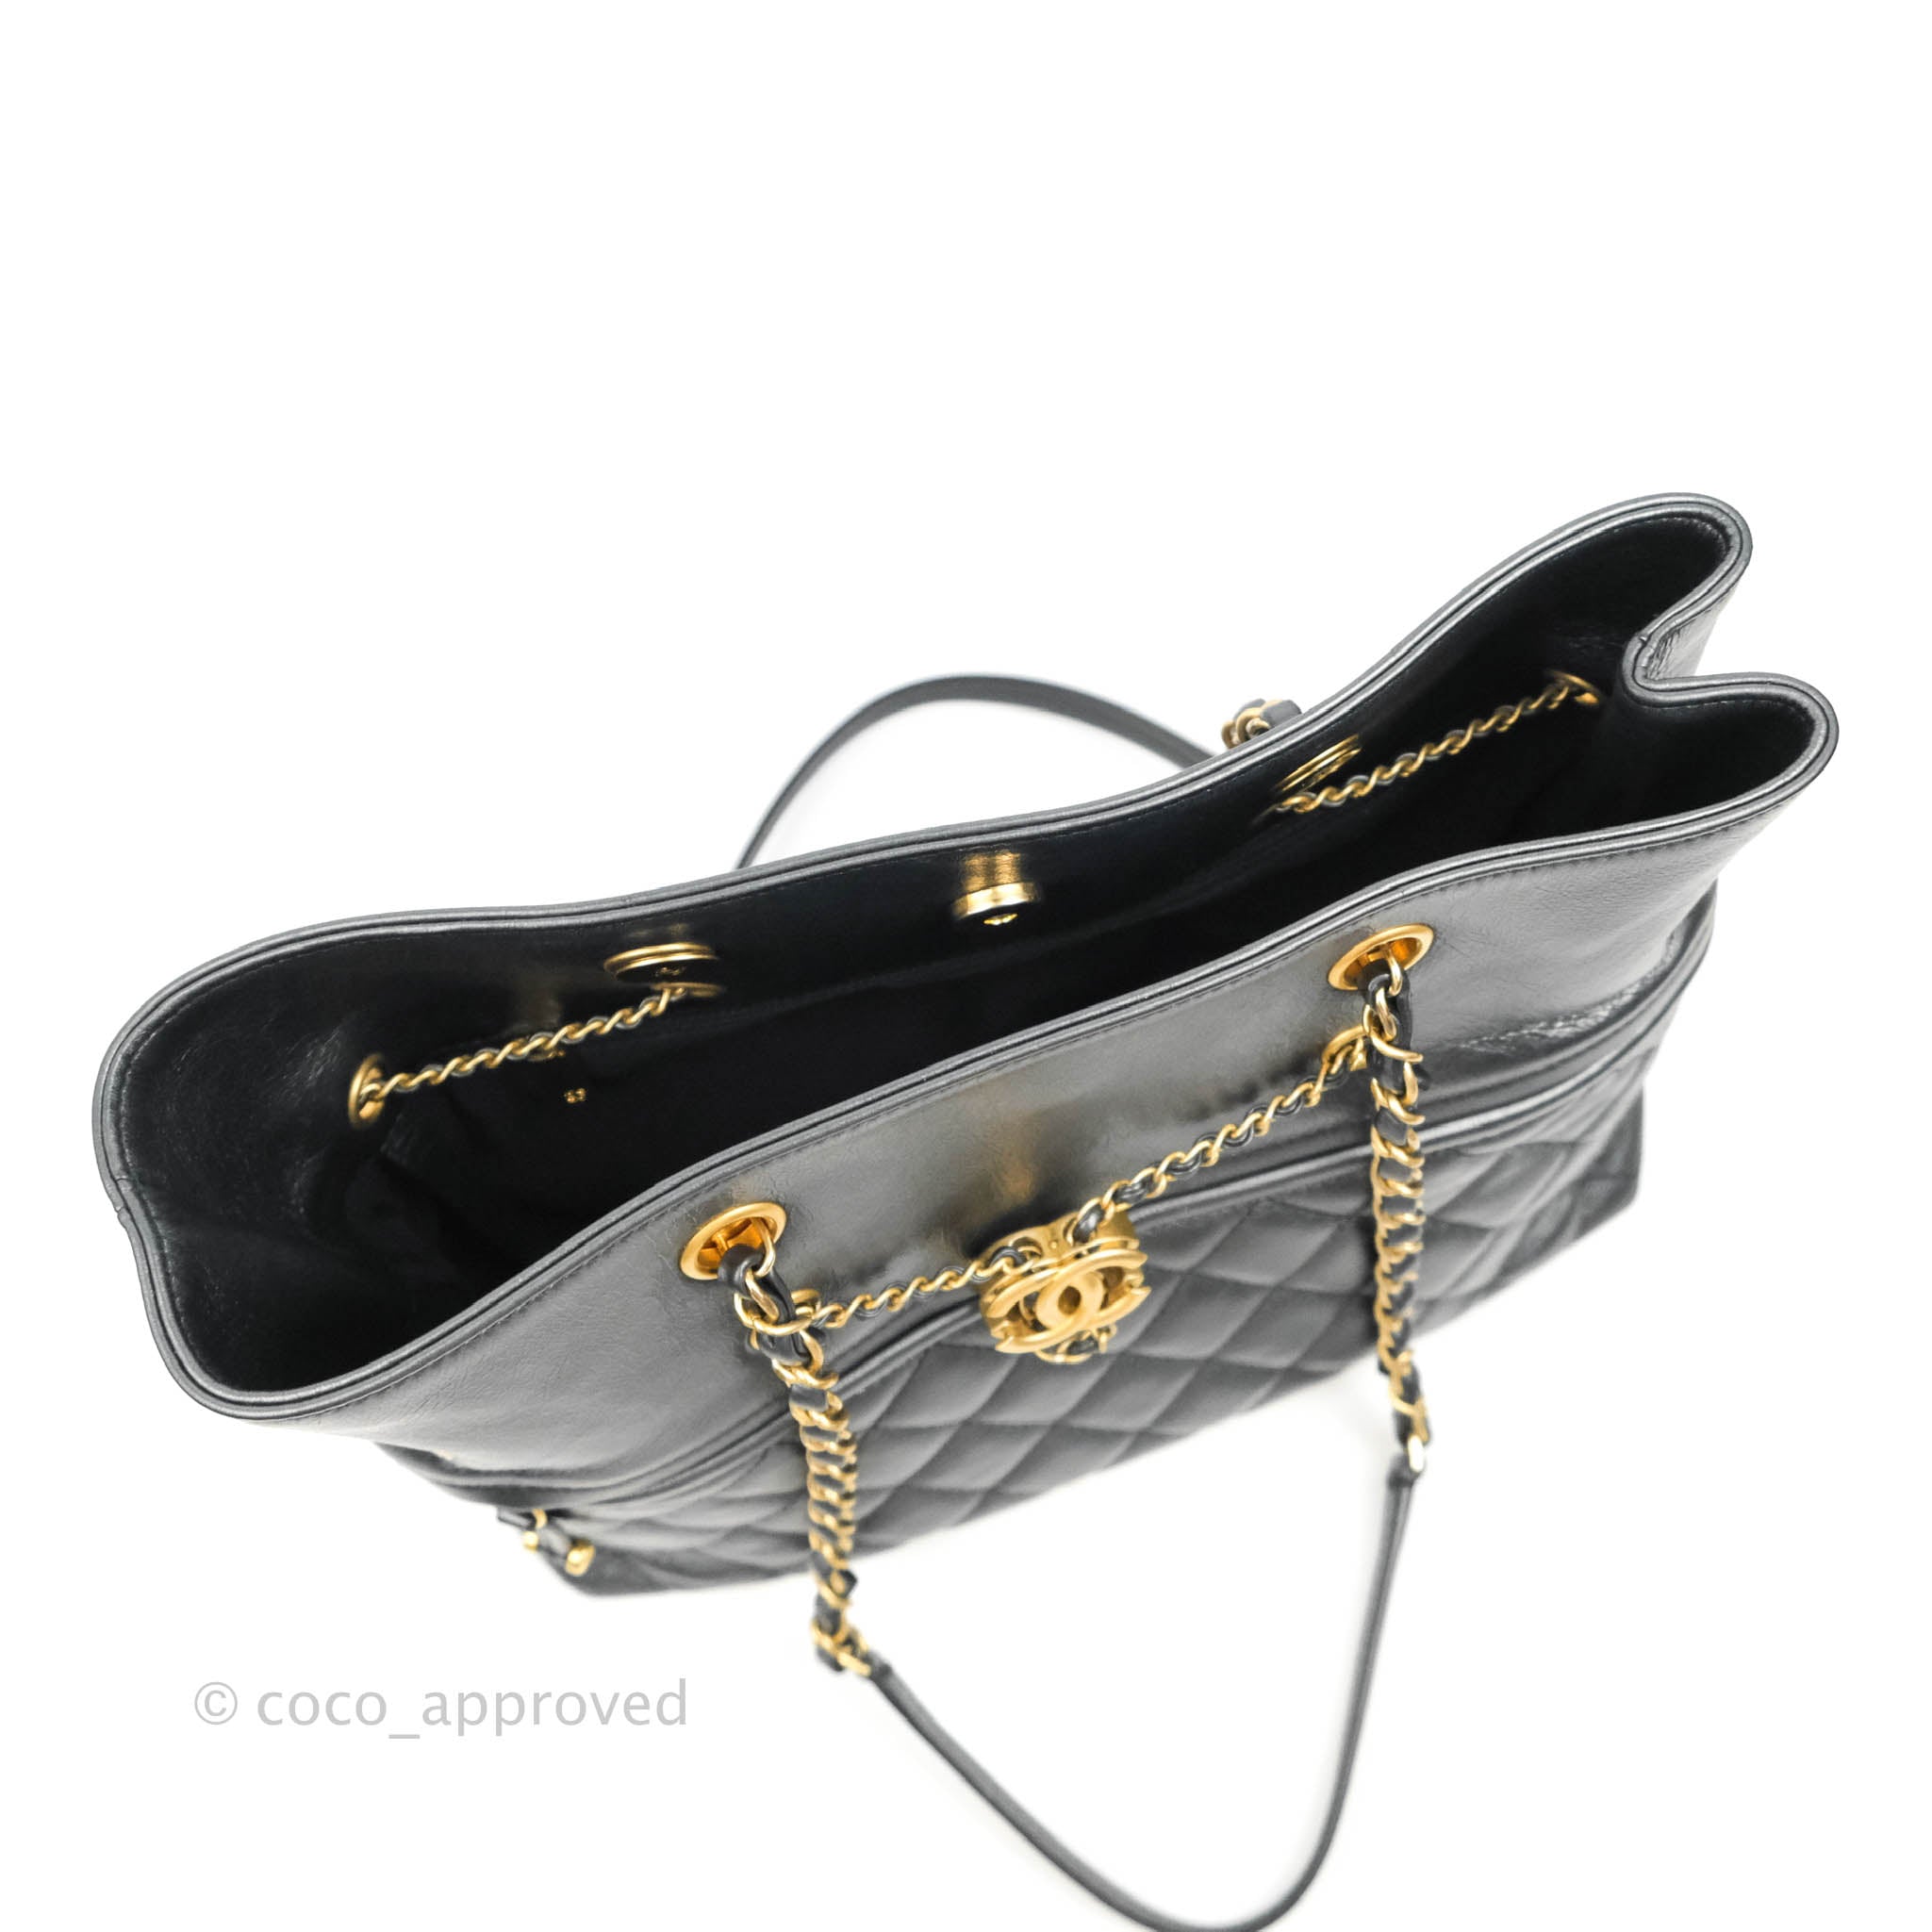 chanel handbags used designer